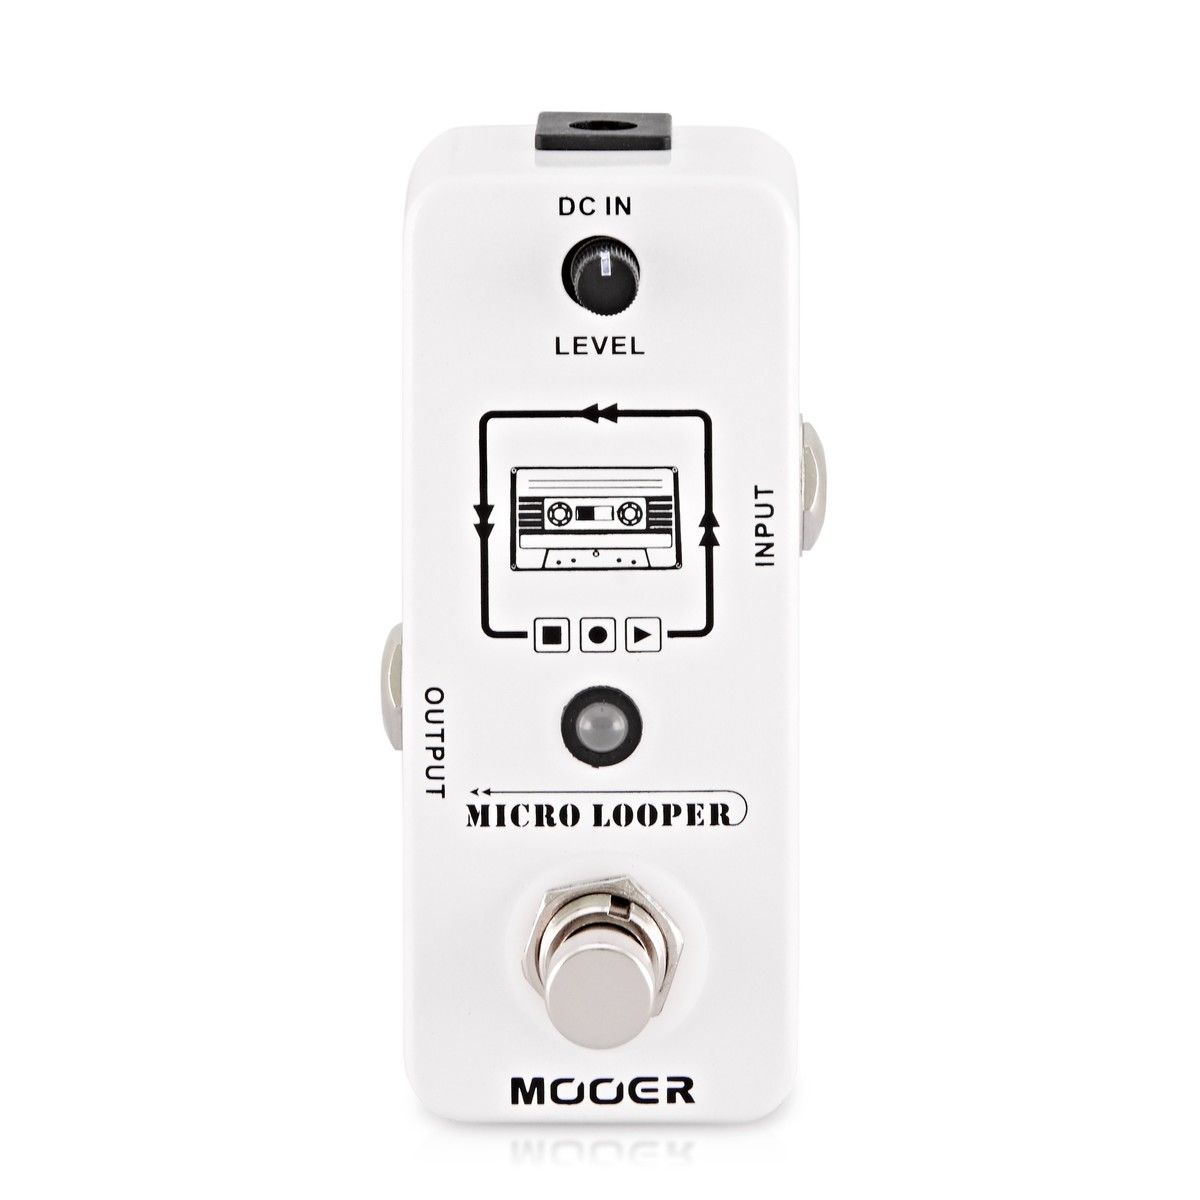   Mooer Micro Looper